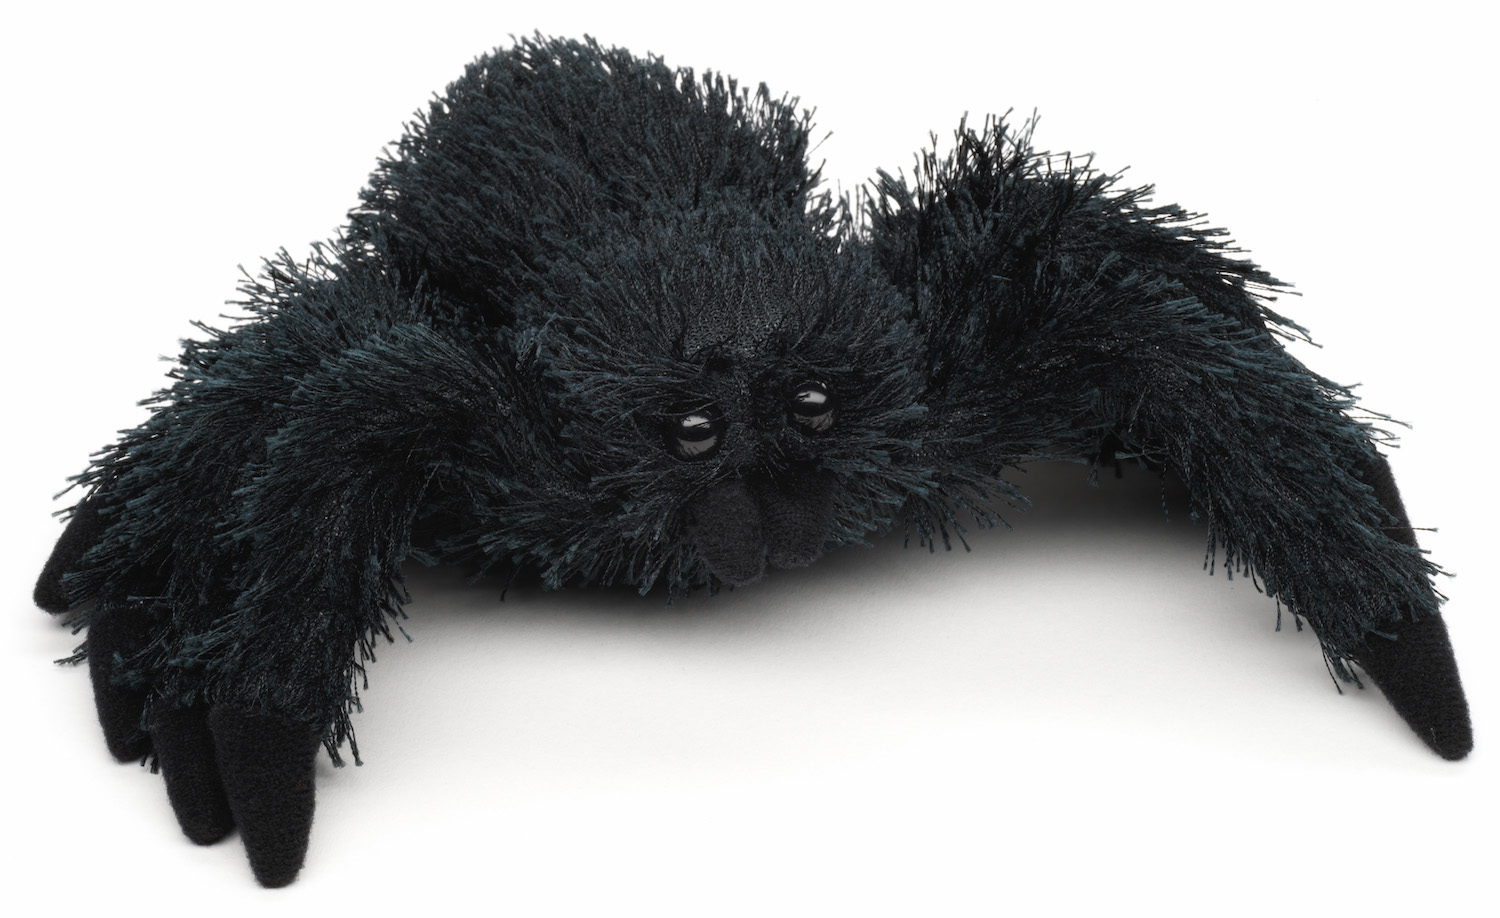 Black spider - 15 cm (length)